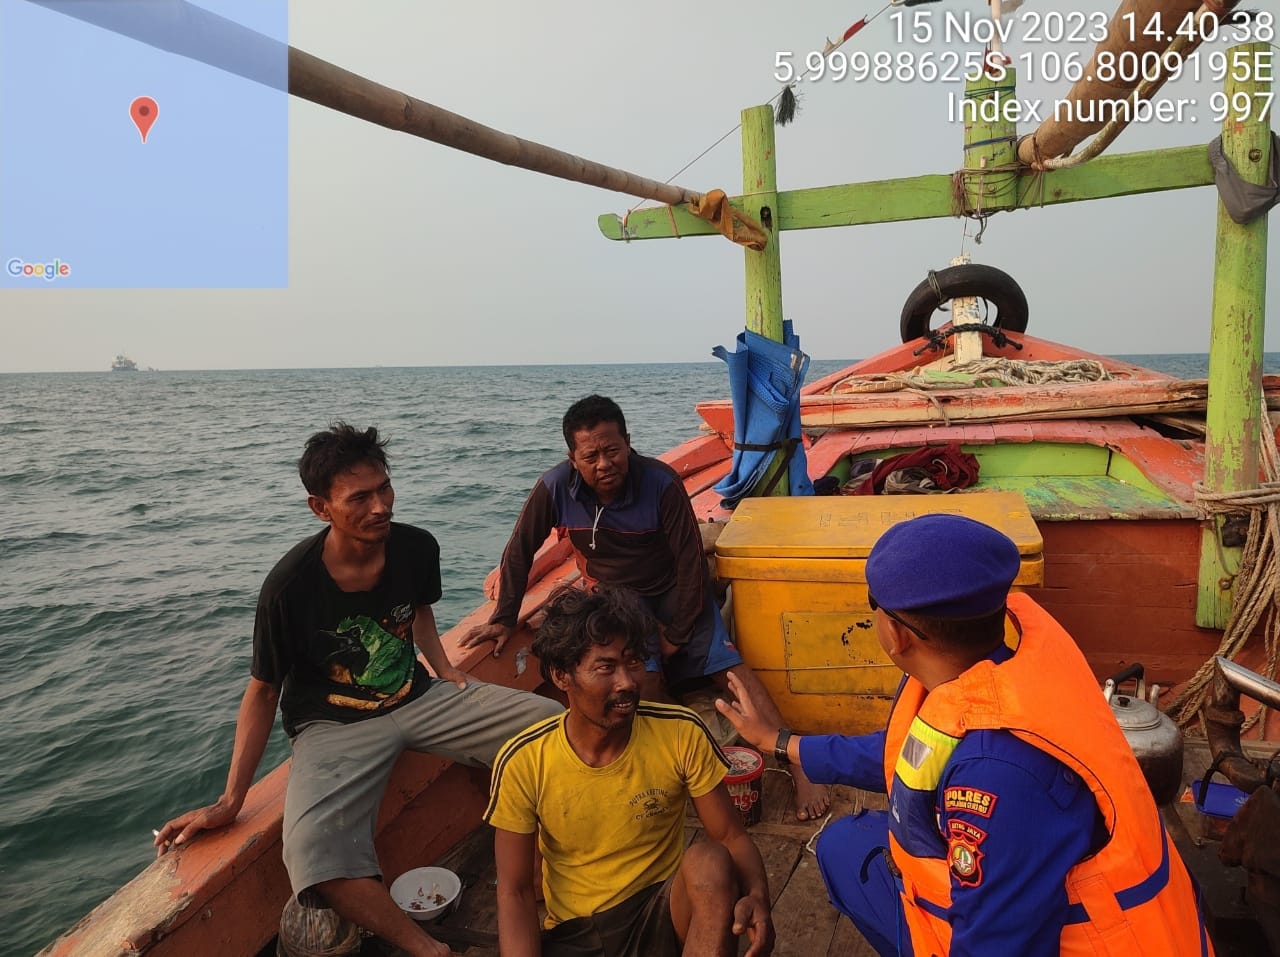 Satuan Polair Polres Kepulauan Seribu Gelar Patroli Laut di Perairan Pulau Untung Jawa dengan Kapal Polisi KP. VII-40-204